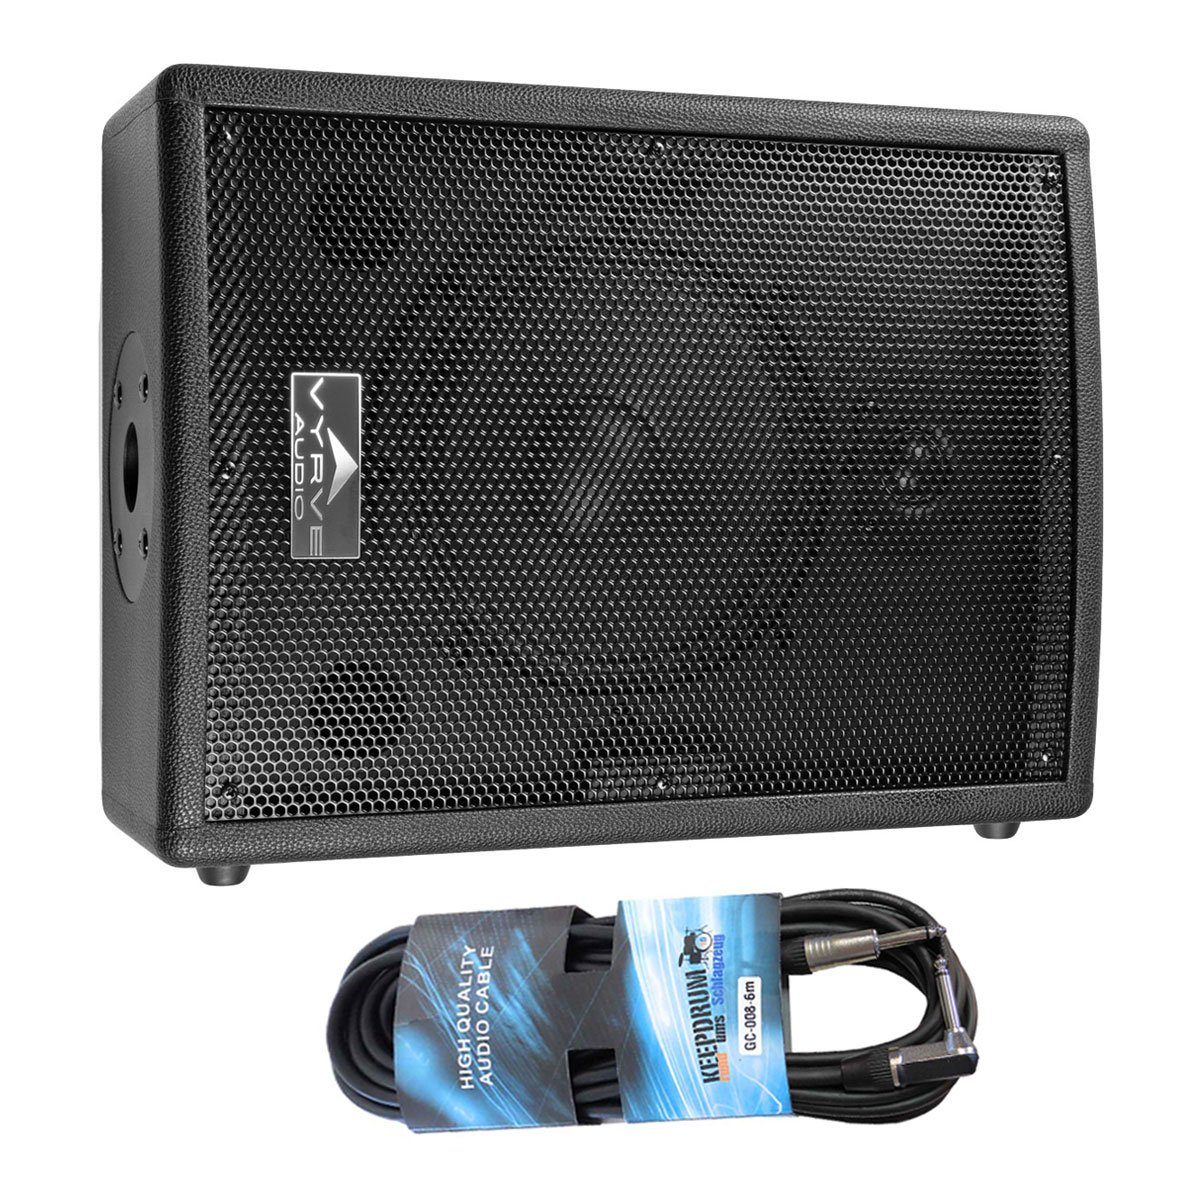 Vyrve Audio Vyrve Audio Klinkenkabel Aktivmonitor Home ATRIA Speaker 